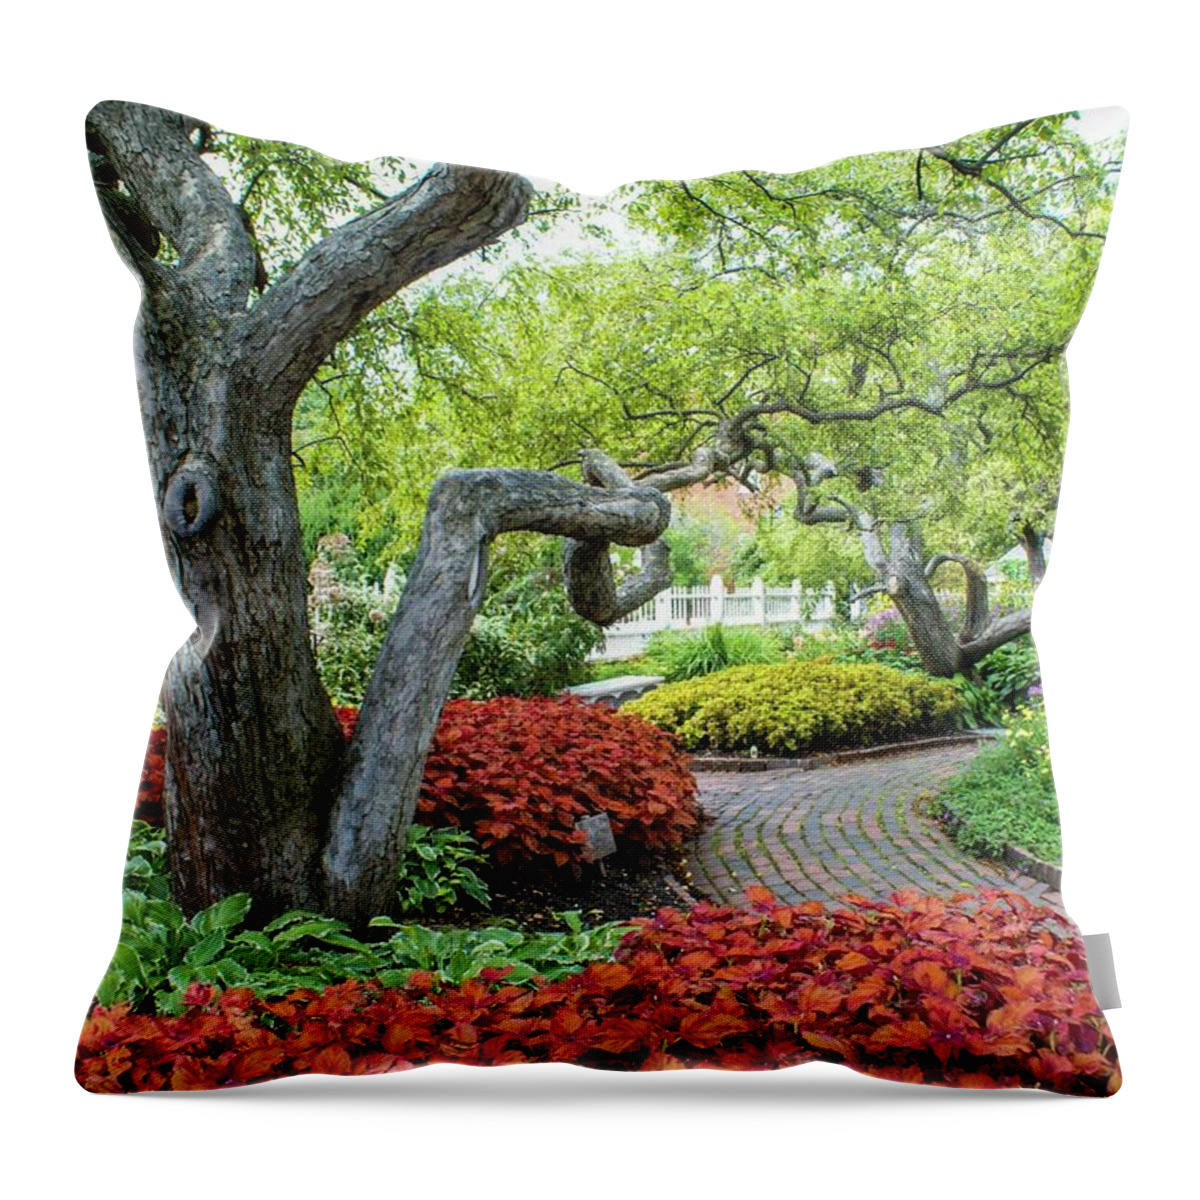 Garden Throw Pillow featuring the photograph In the Garden #1 by Lois Lepisto